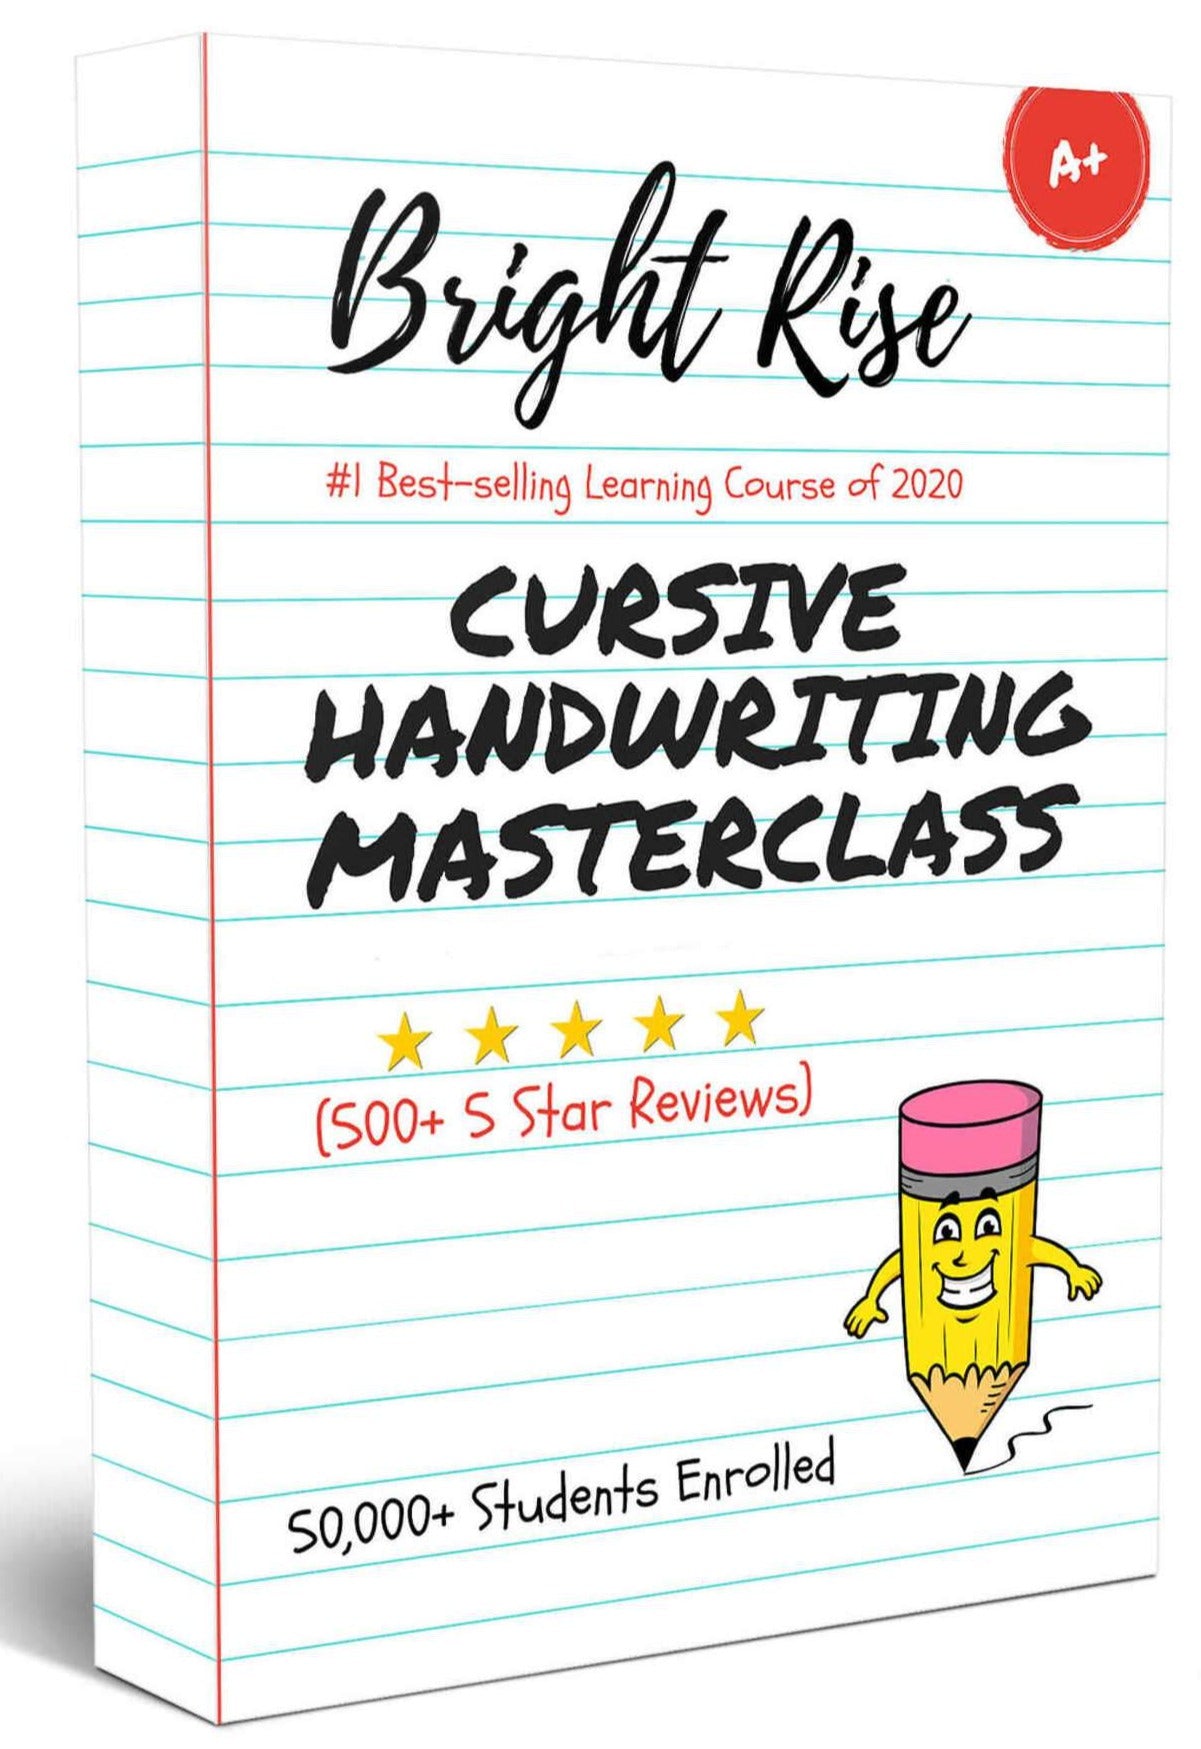 Cursive Handwriting Masterclass (Online Course)